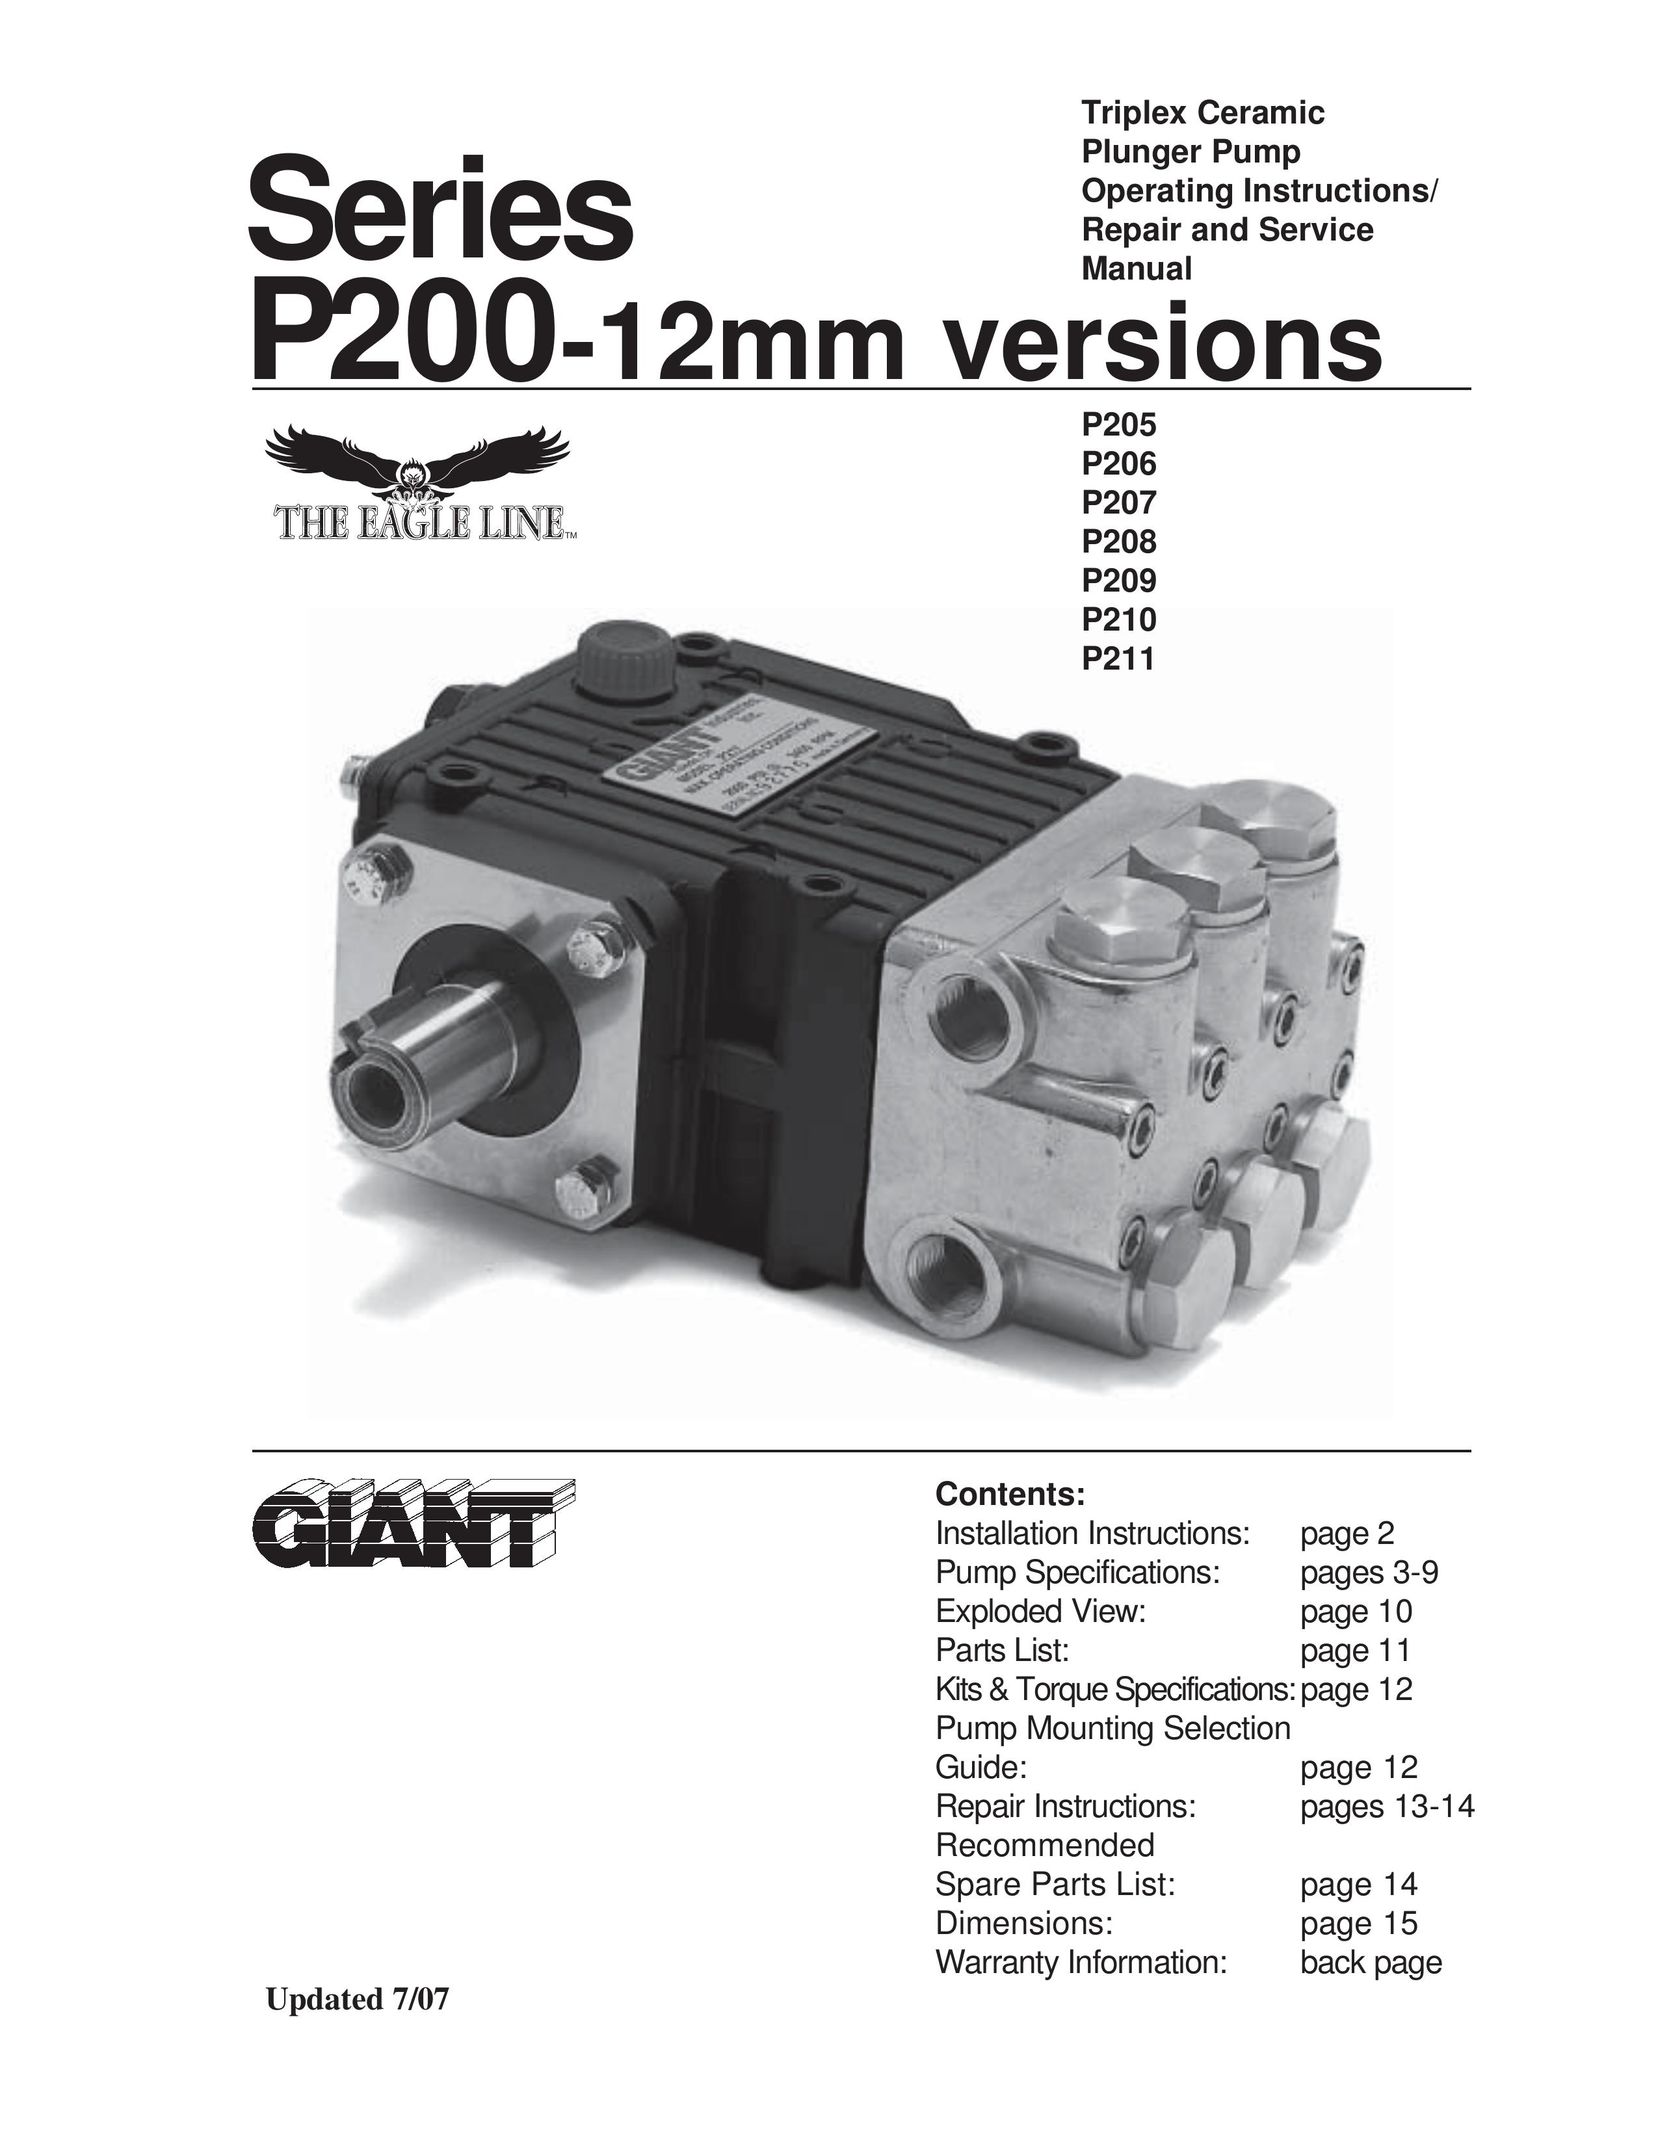 Giant P211 Heat Pump User Manual